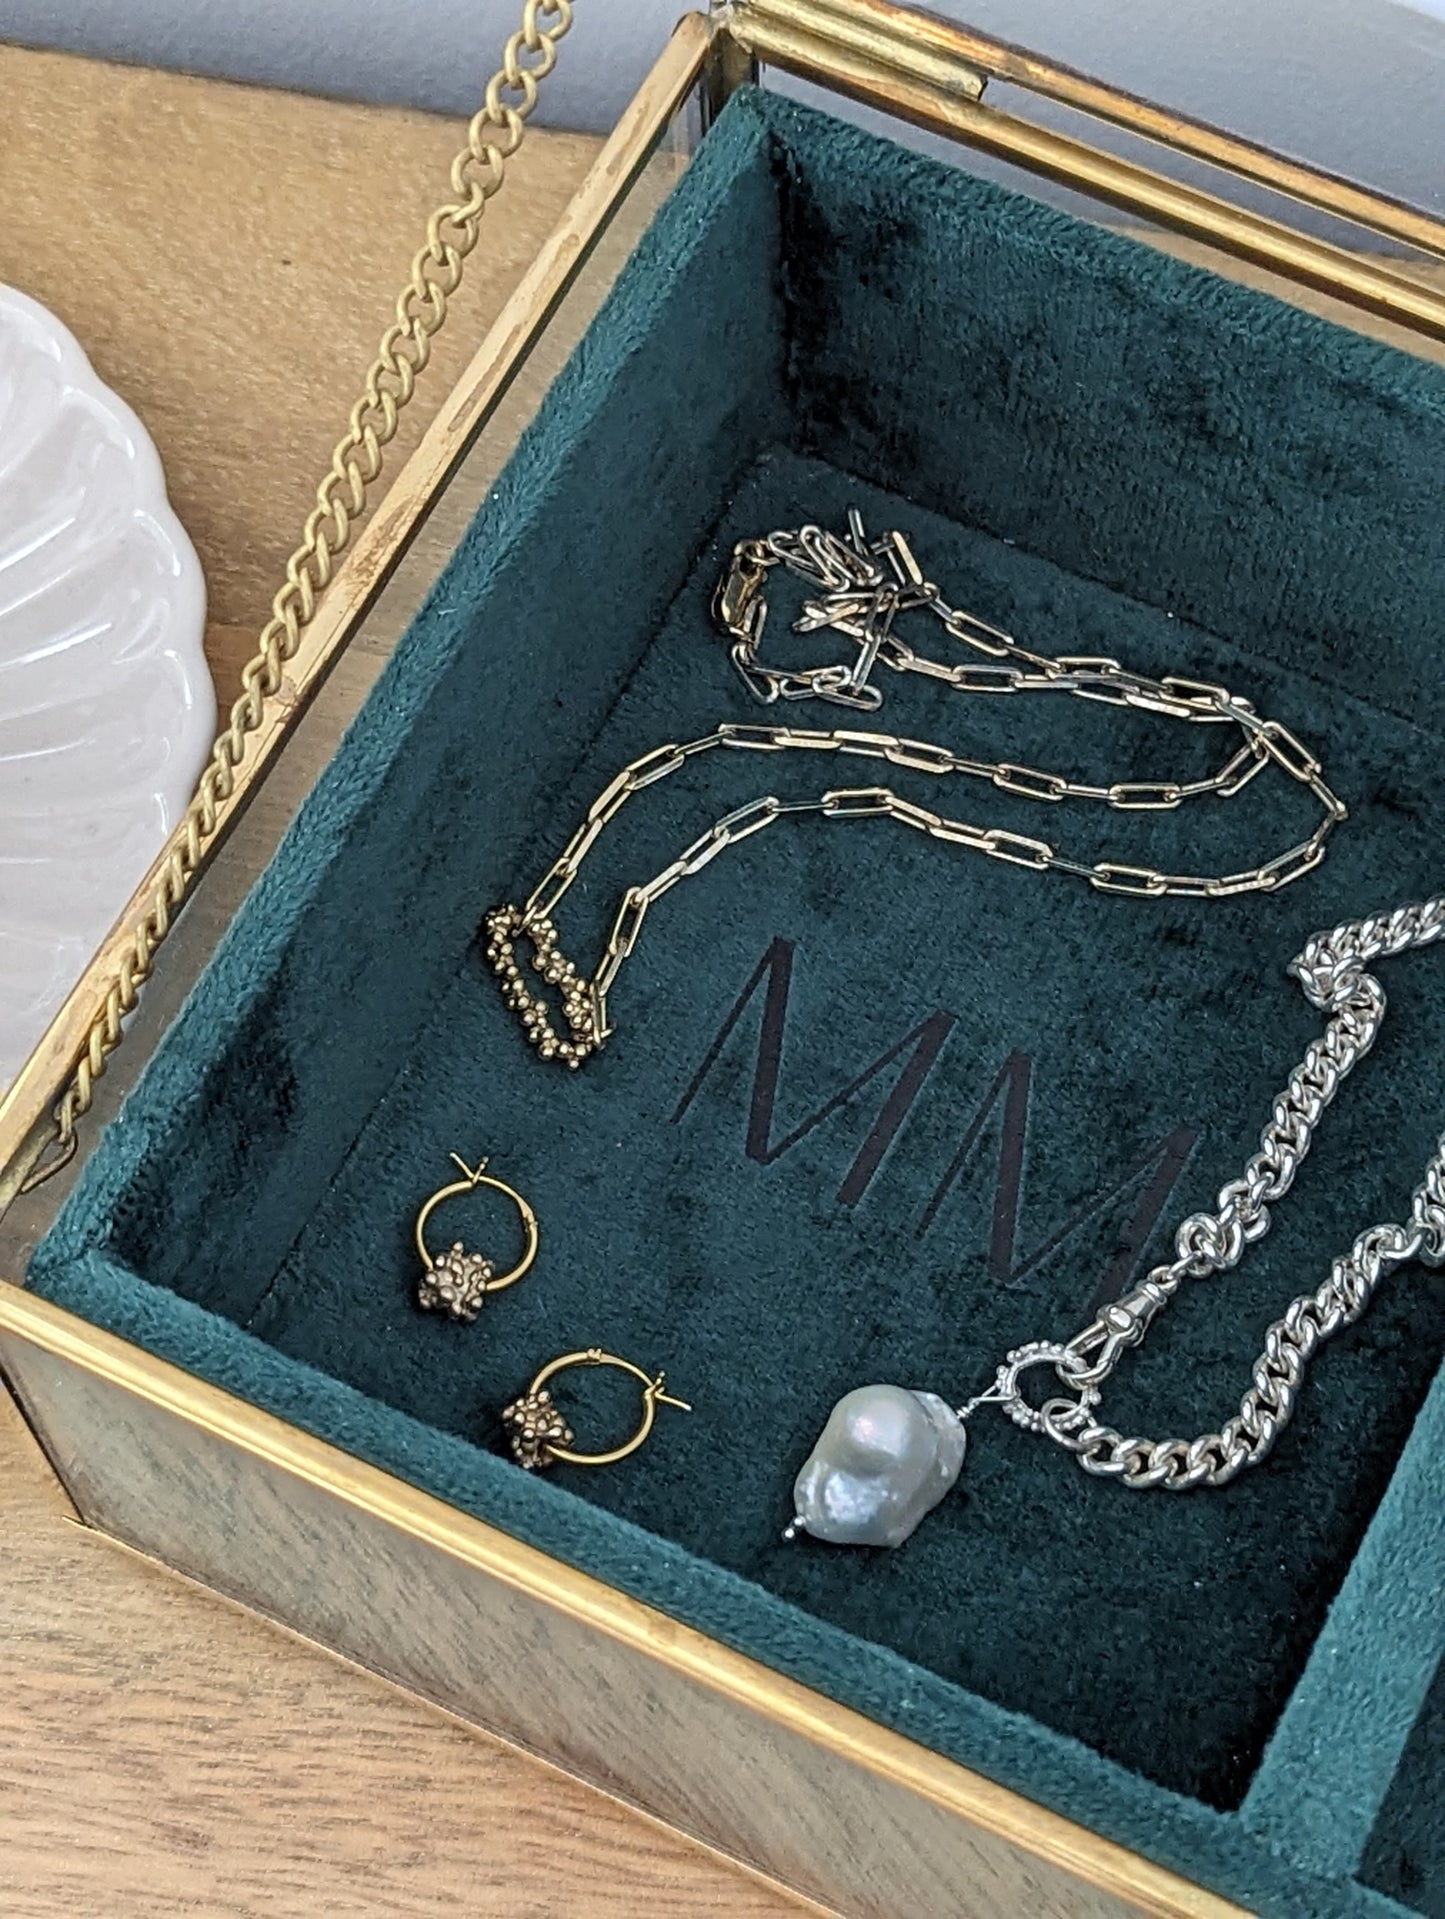 Glass Jewellery Box